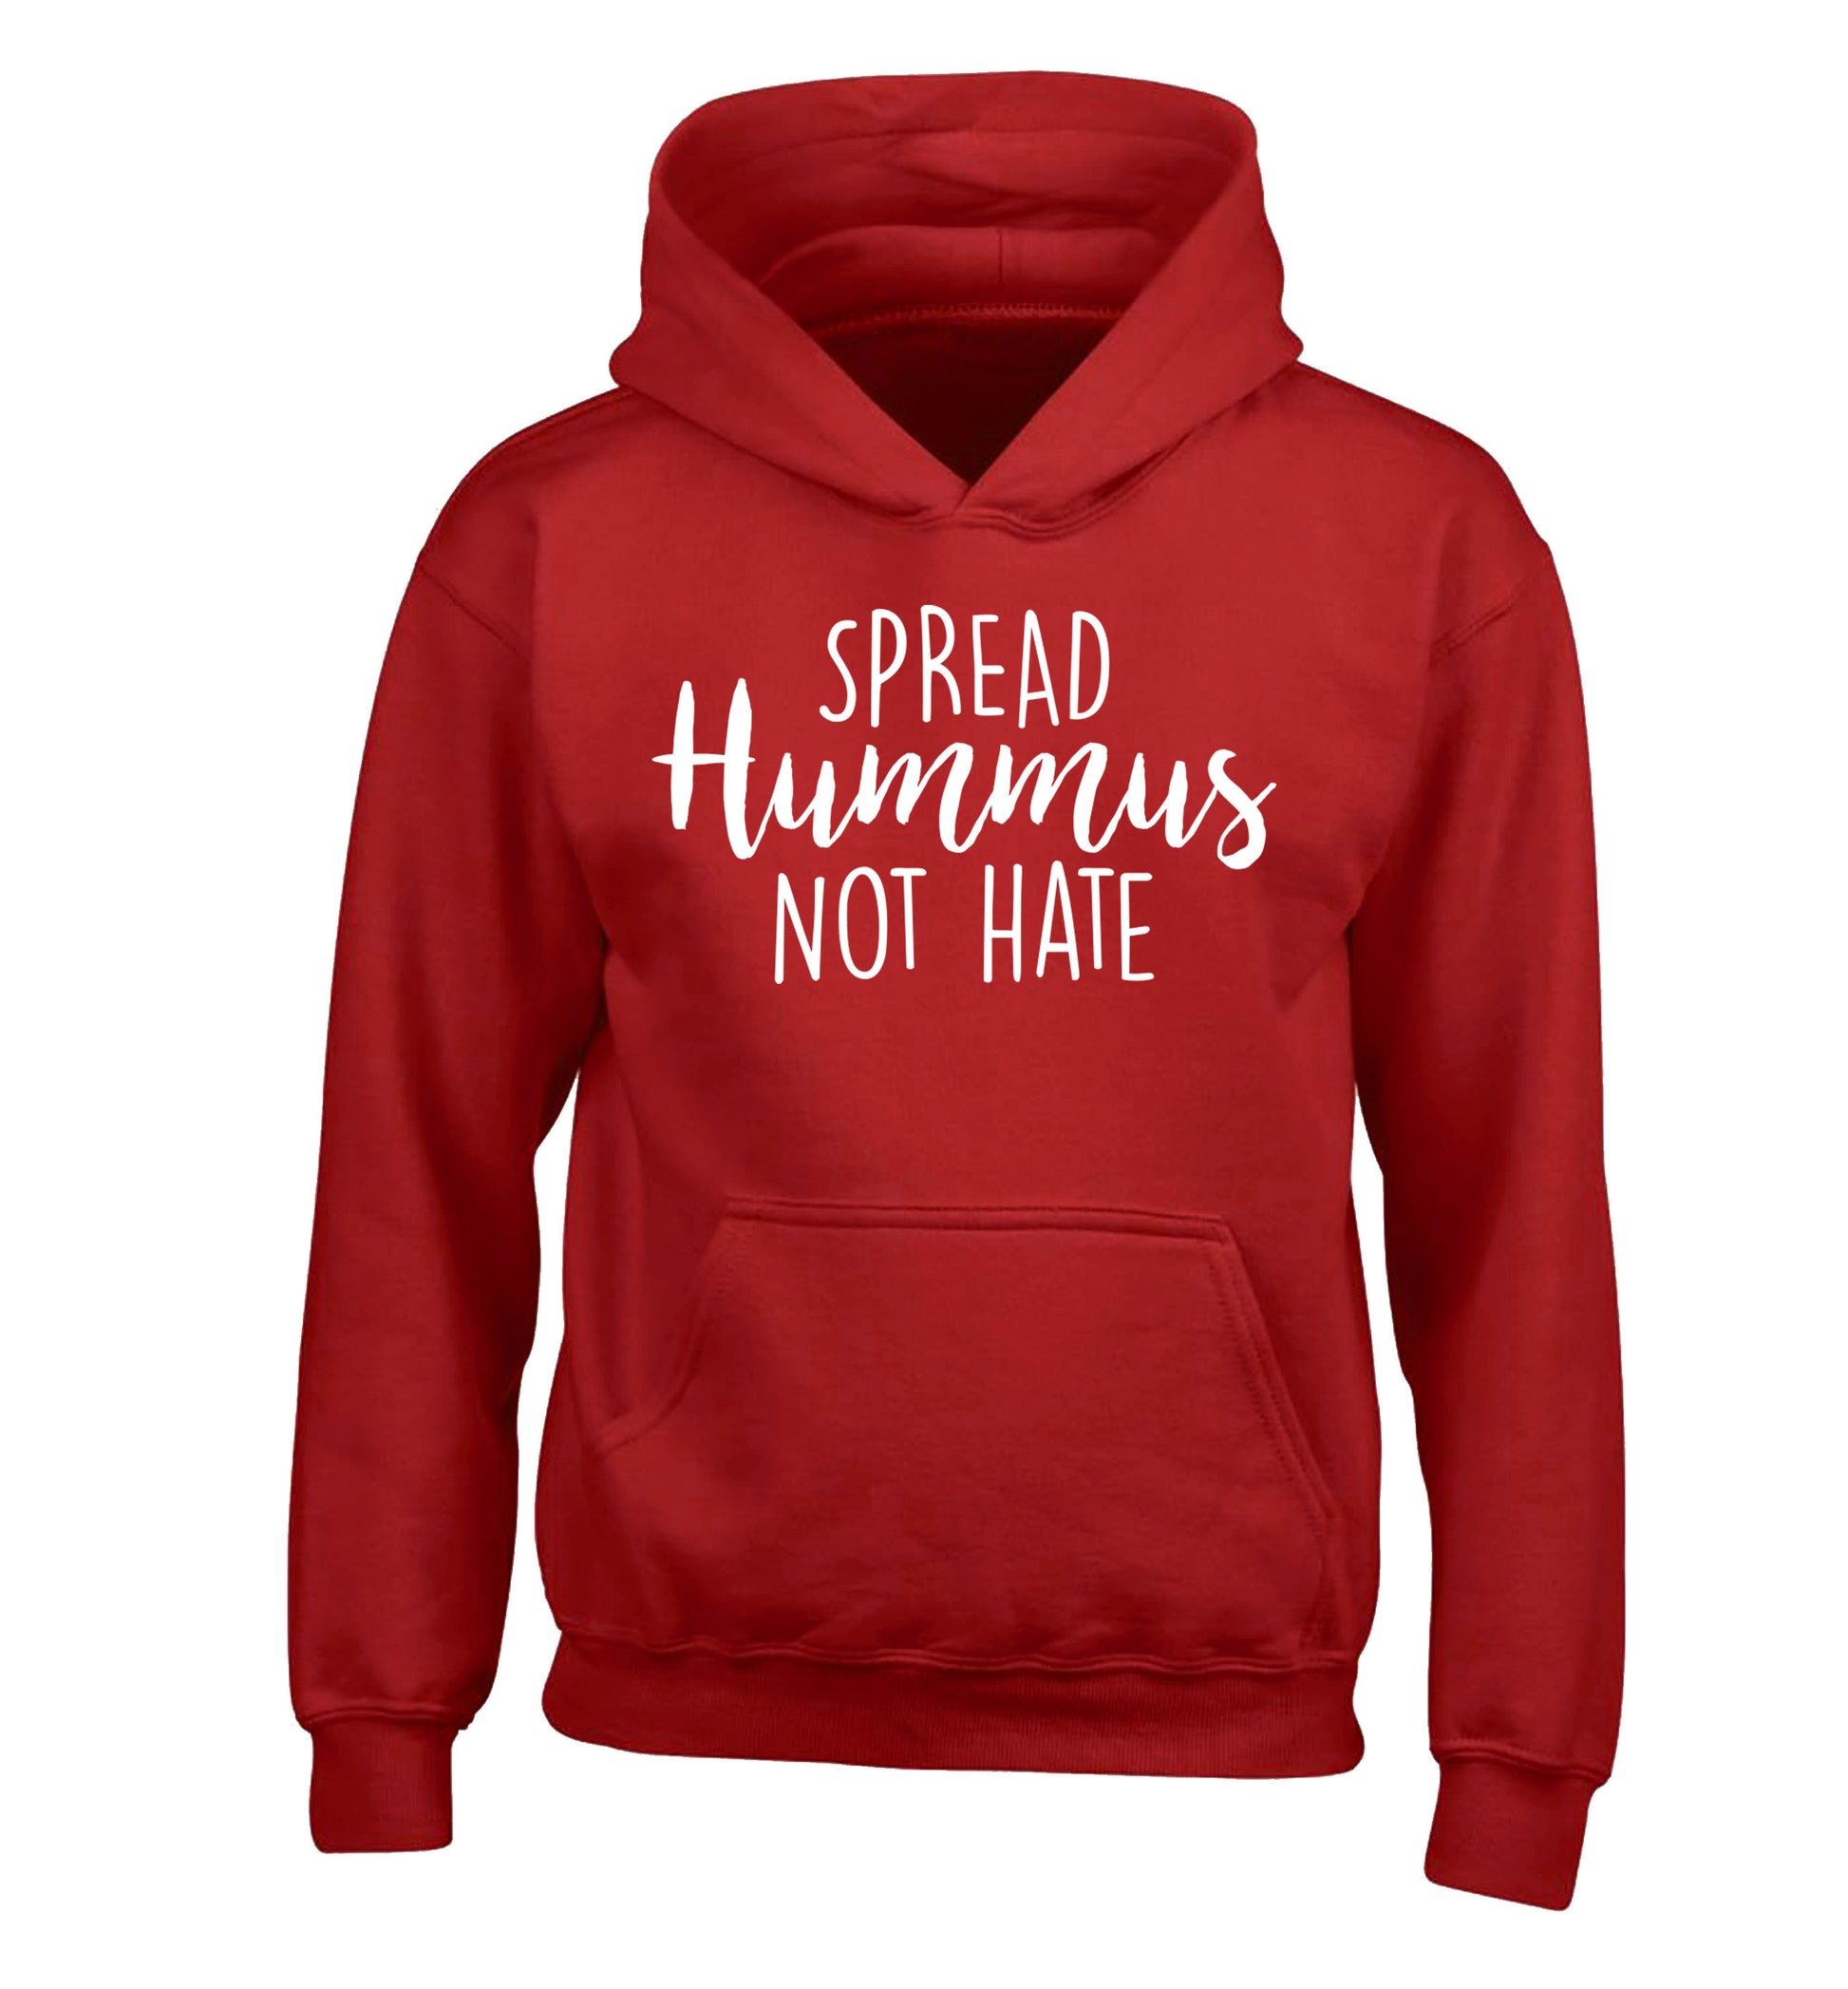 Spread hummus not hate script text children's red hoodie 12-14 Years